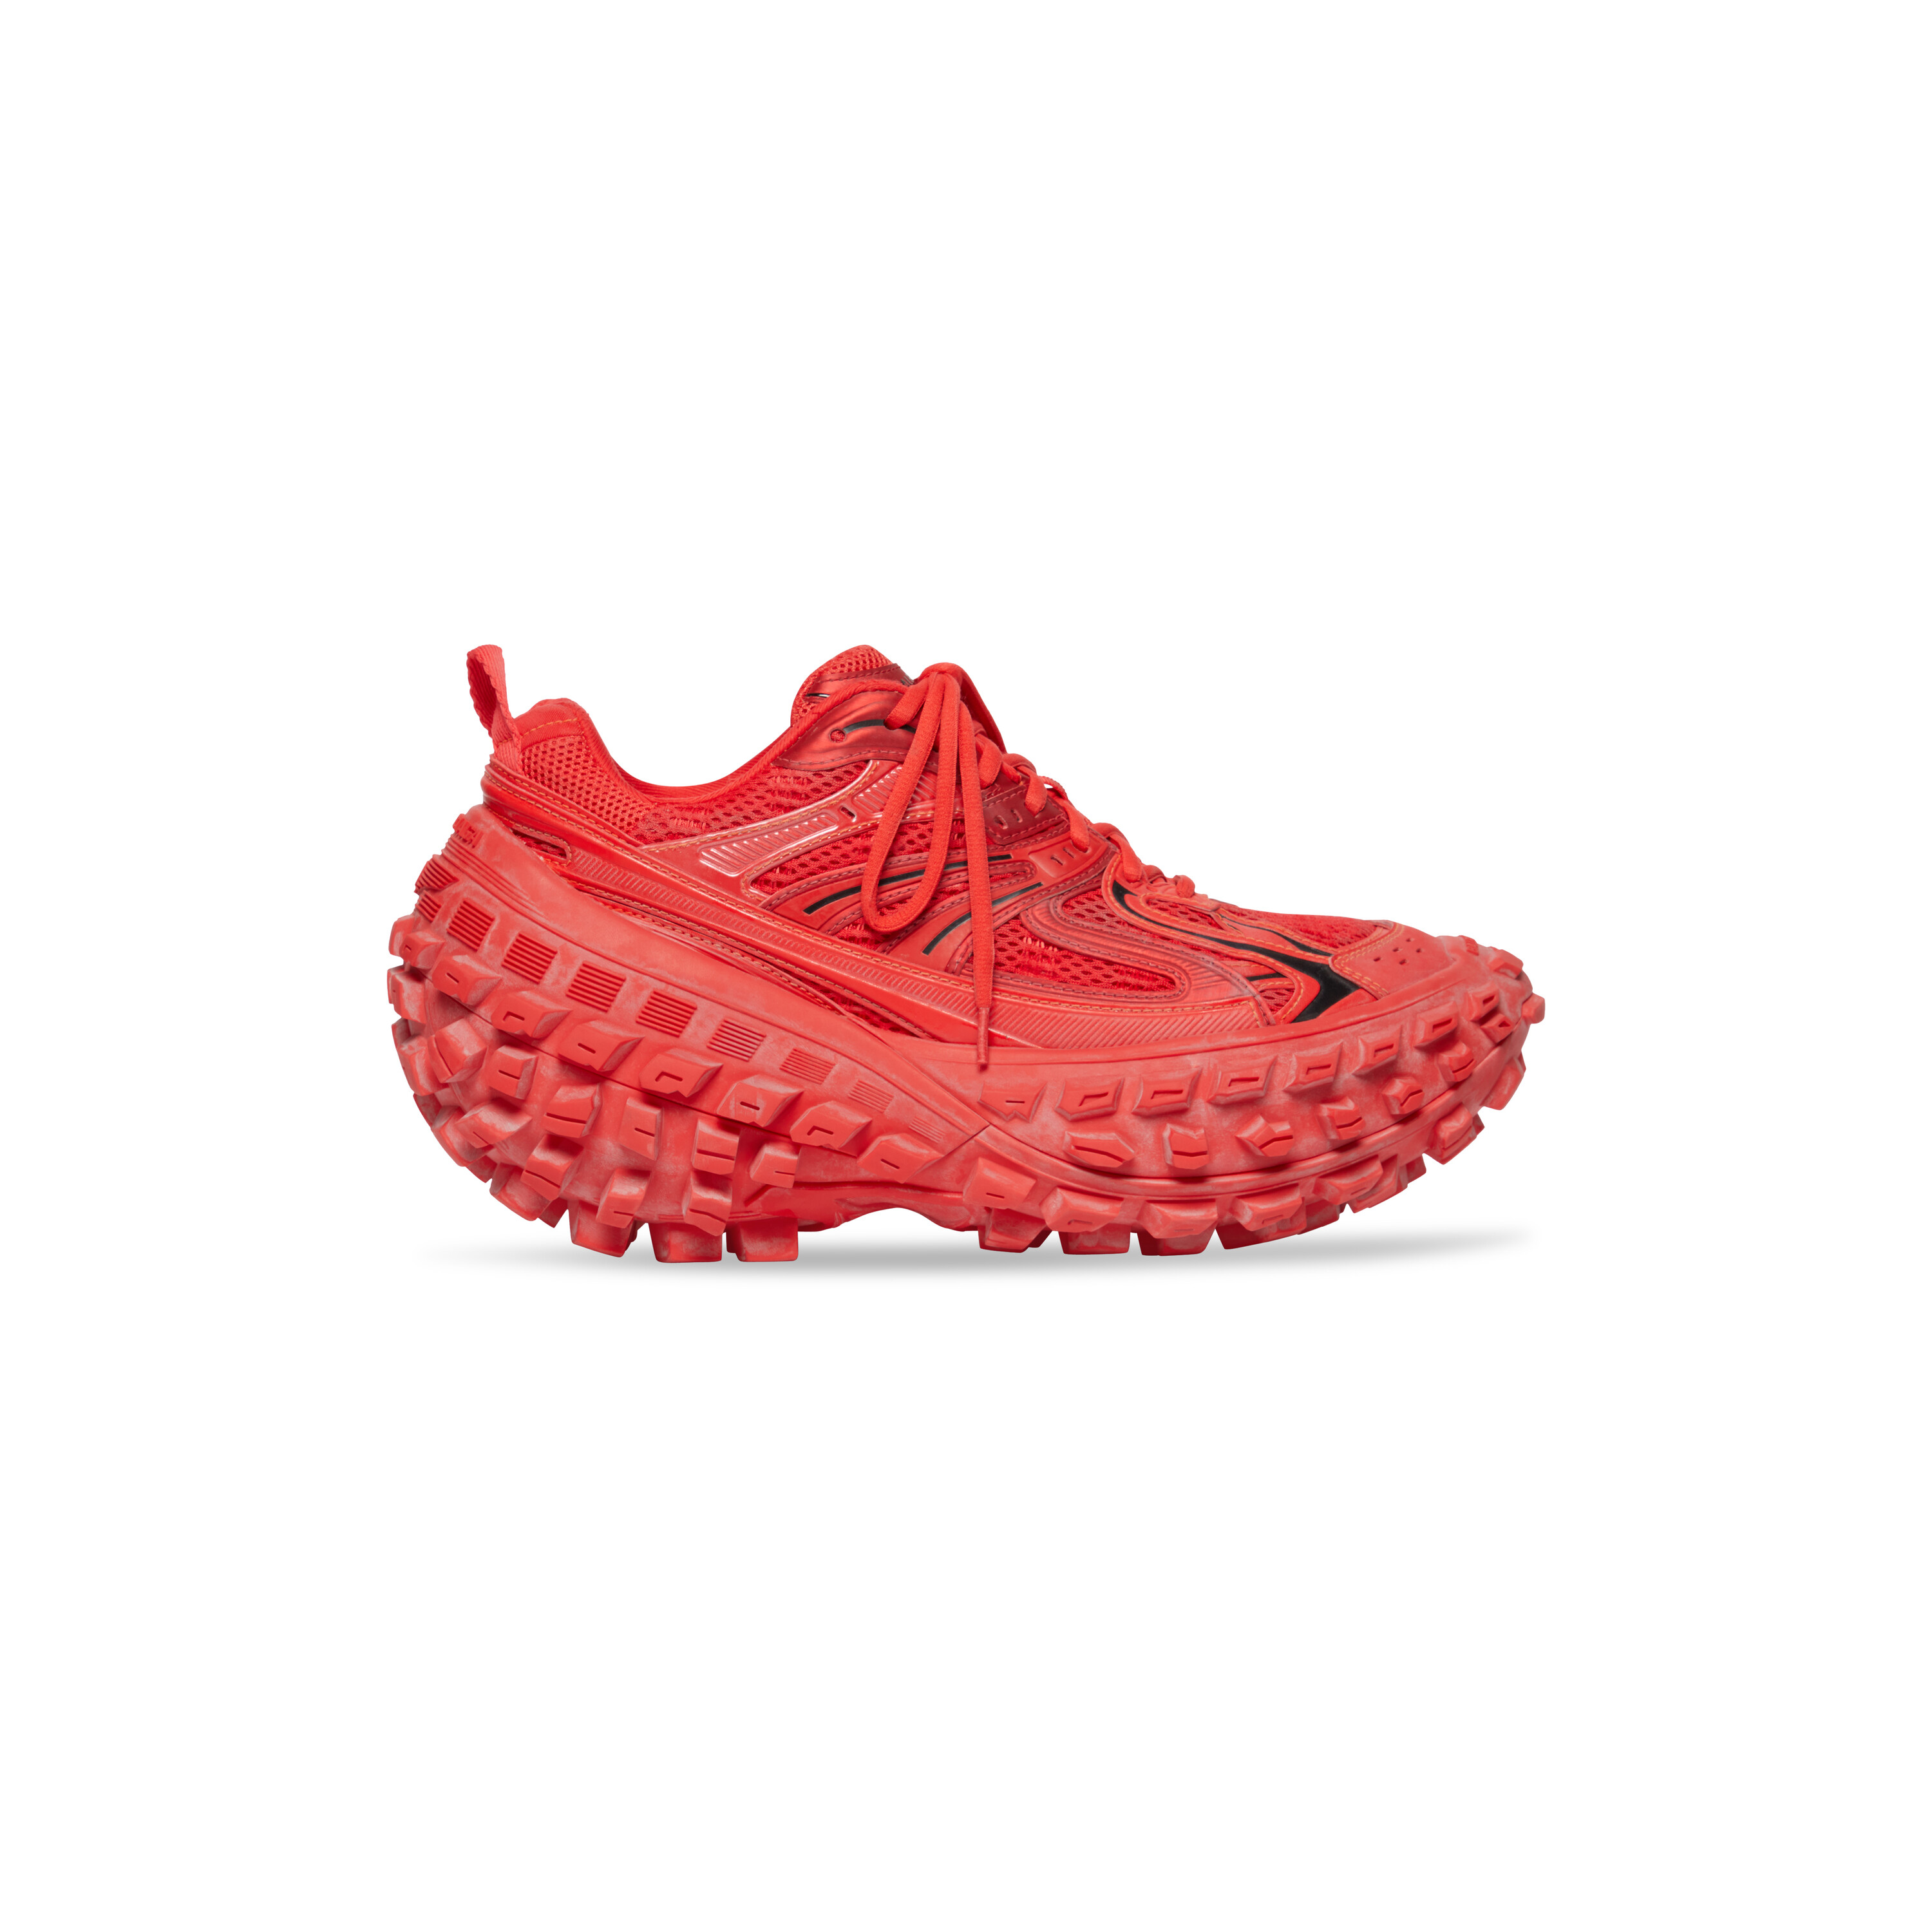 Men's Red Balenciaga Shoes & Sneakers